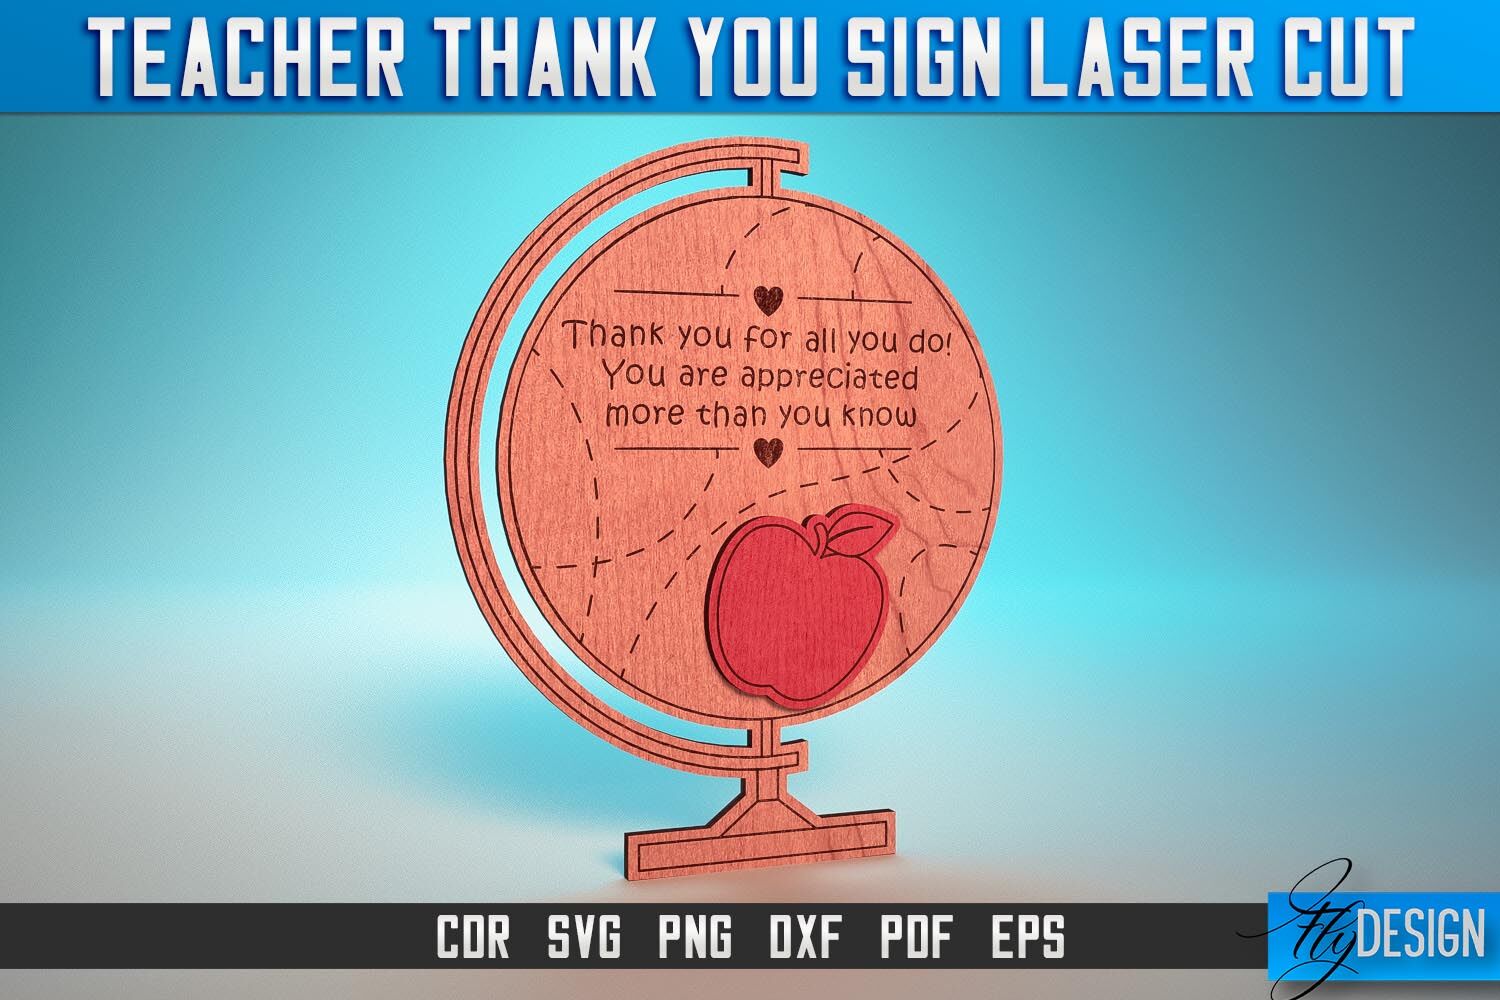 Thank You Teacher Sign Laser Cut Svg Teacher Laser Cut Svg Design By Fly Design Thehungryjpeg 